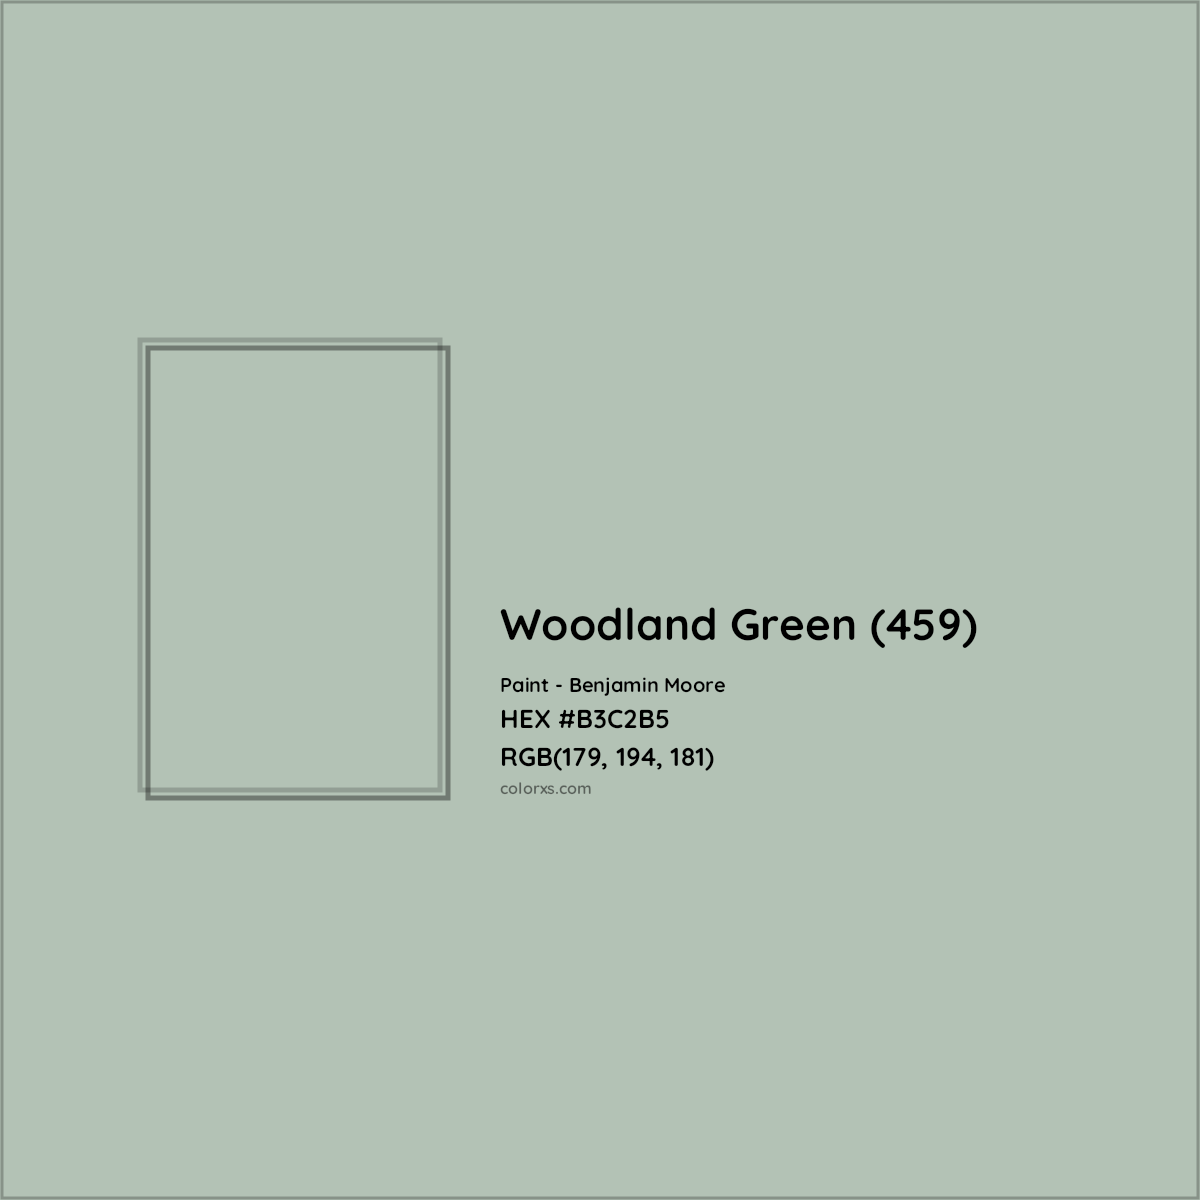 Benjamin Moore Woodland Green (459) Paint color codes, similar